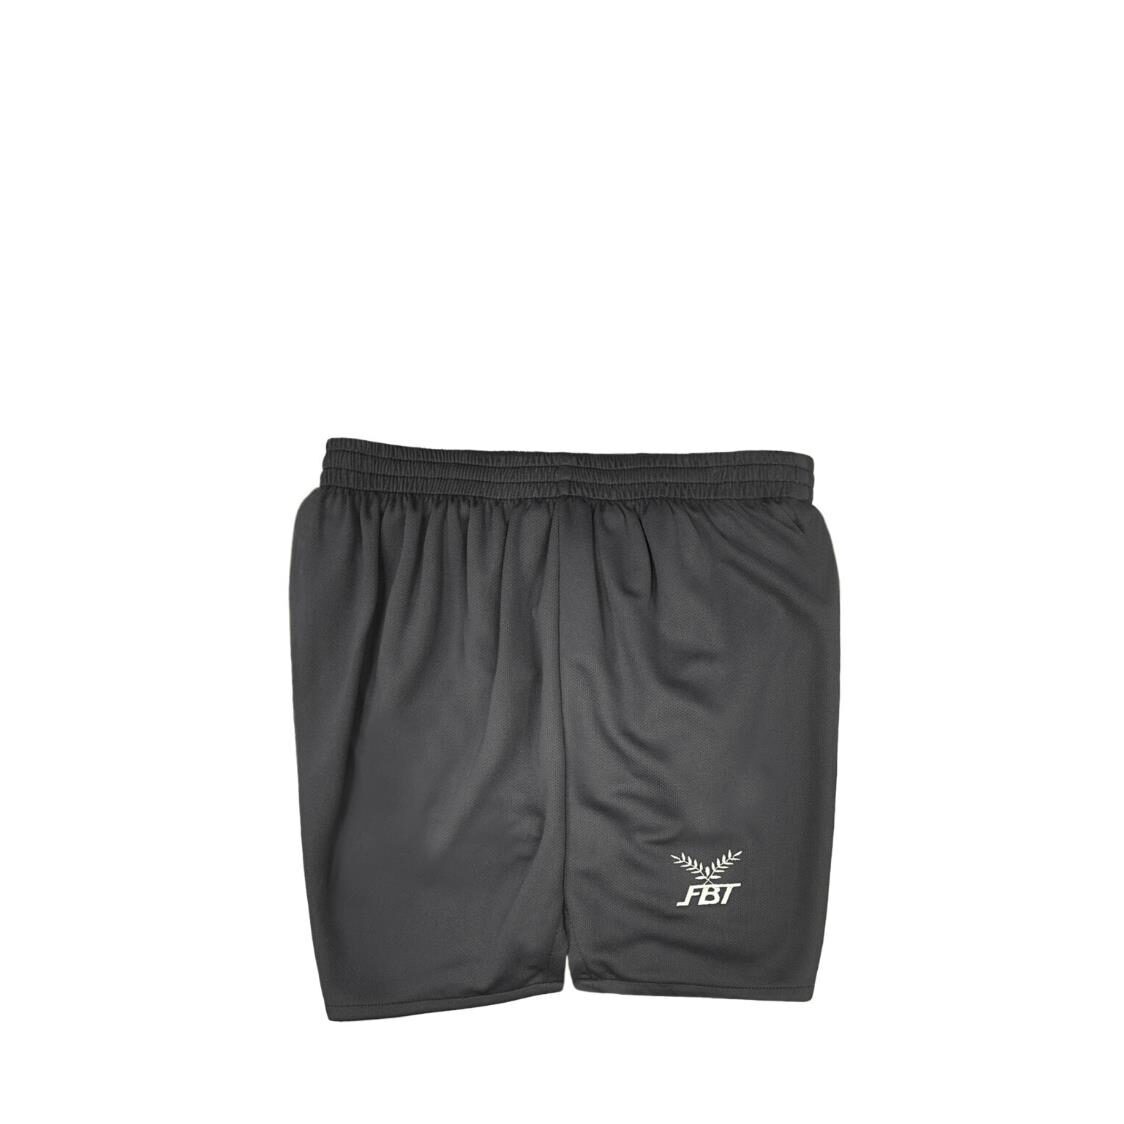 FBT Shorts 22A399A Charcoal Grey